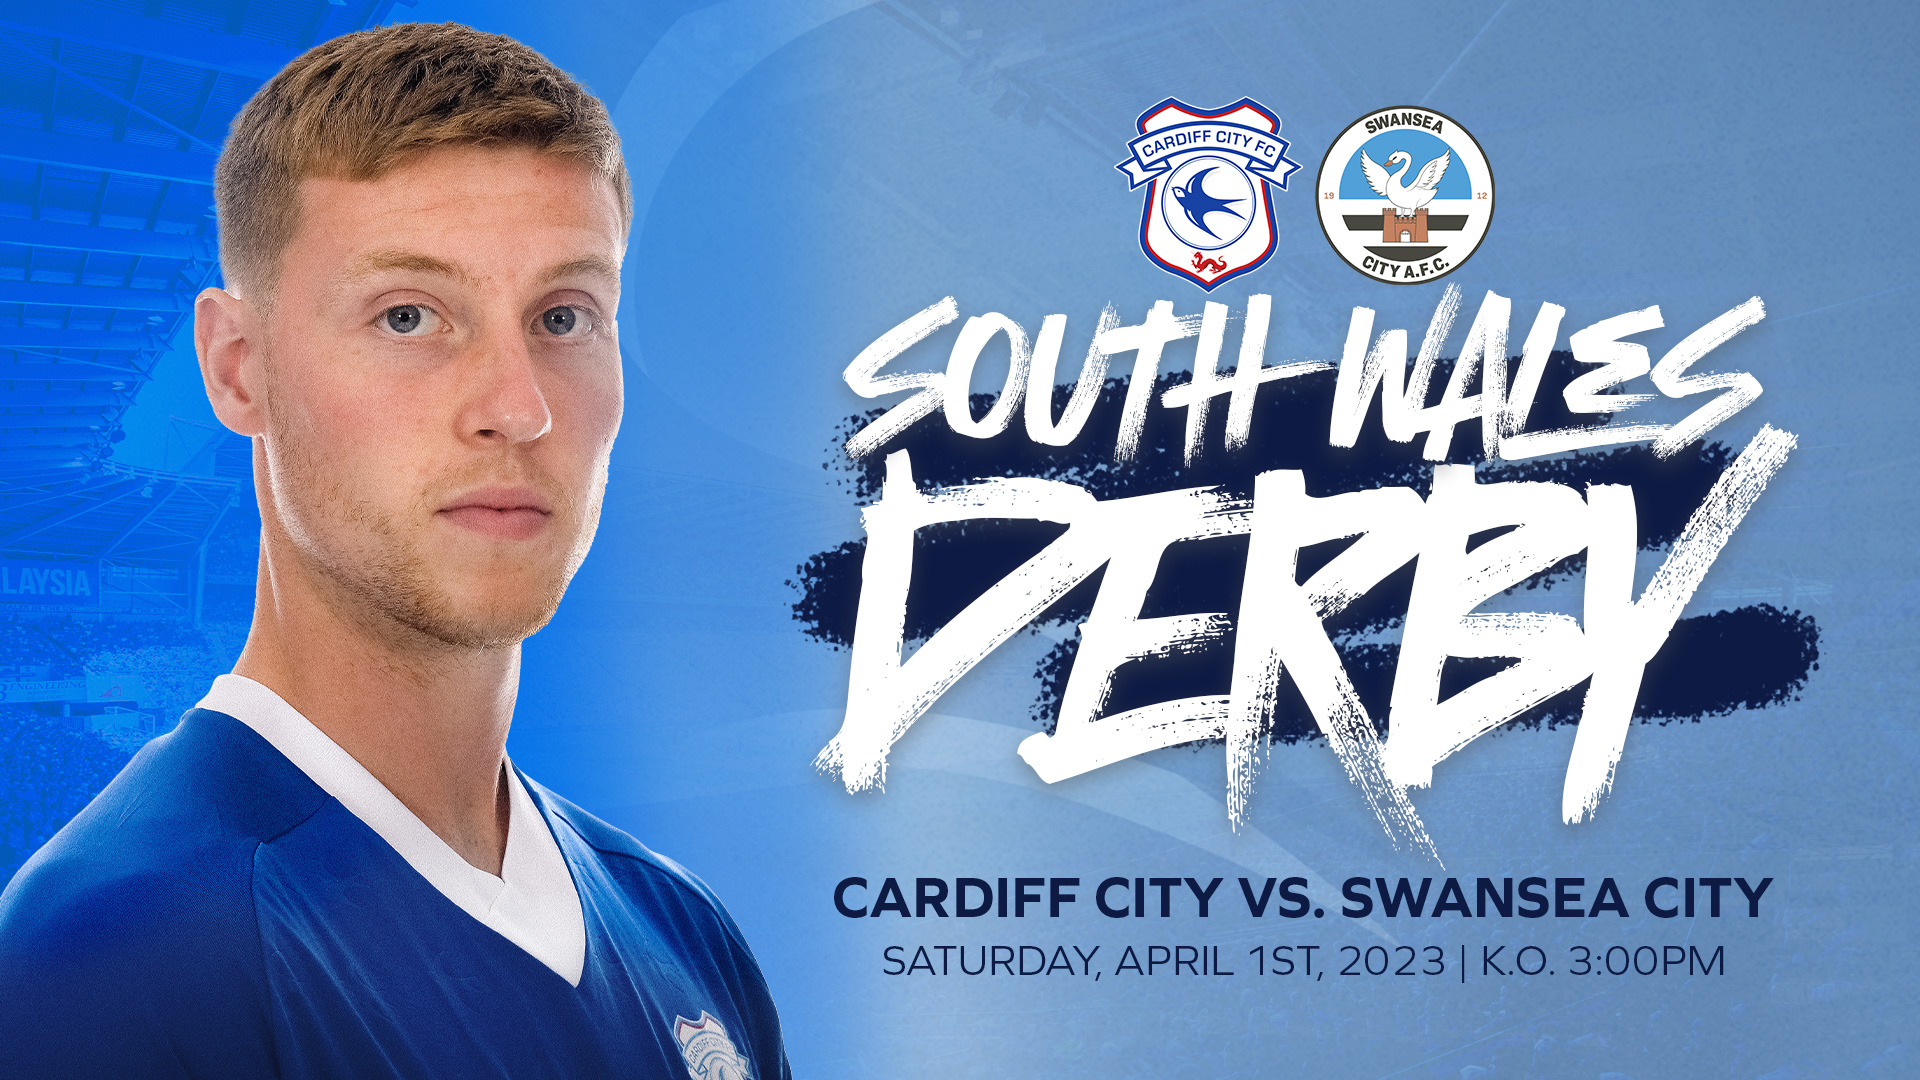 Season 23/24, The Official Cardiff City v Swansea City Match Thread